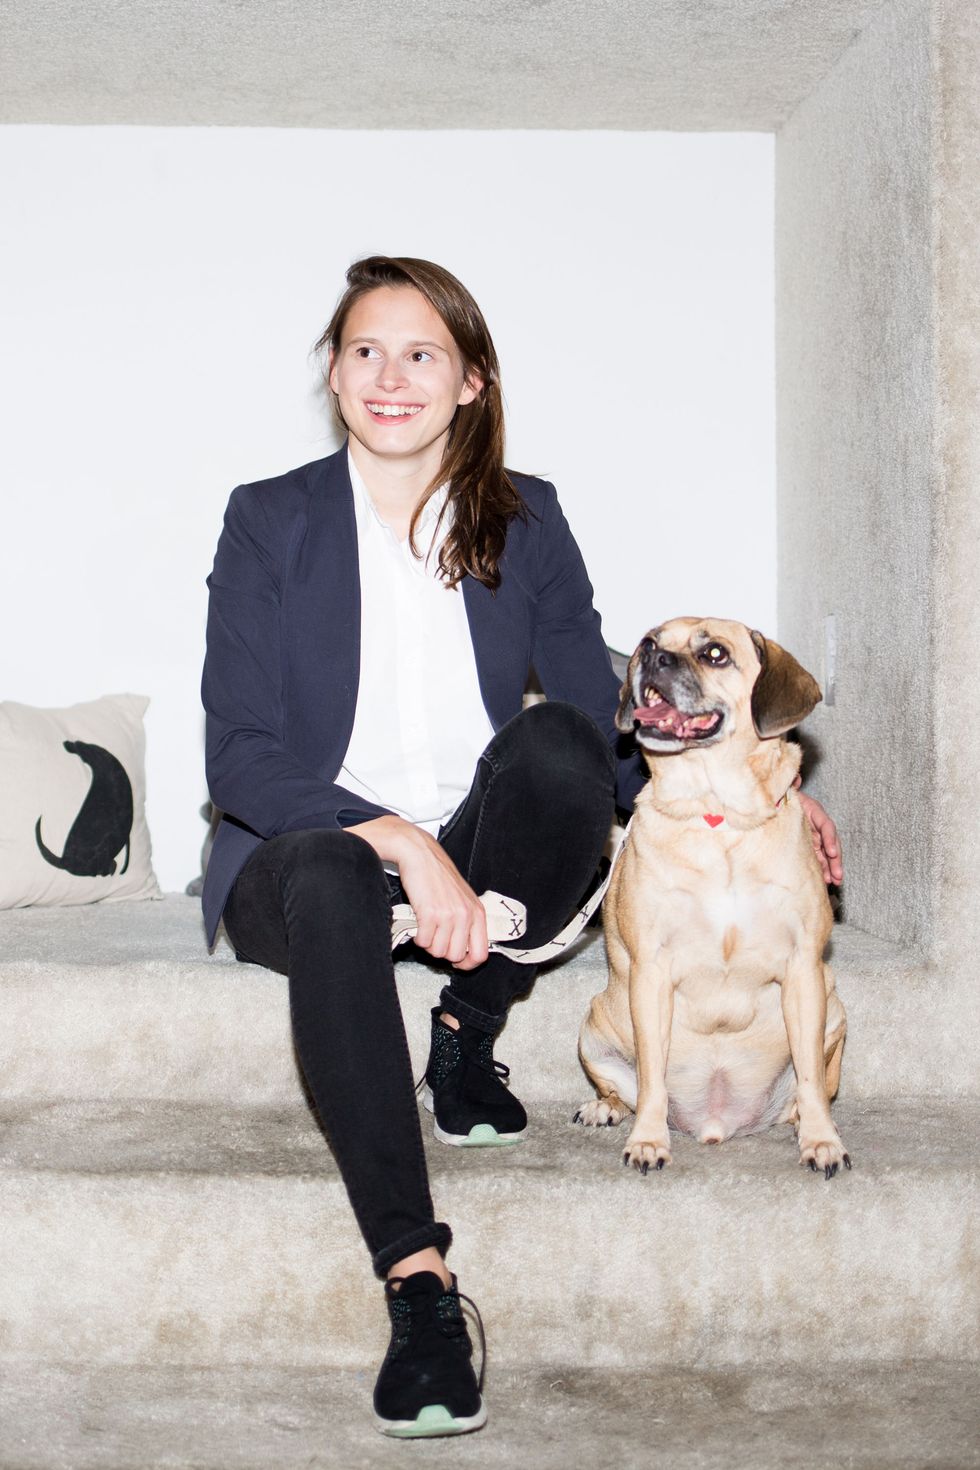 Entrepreneur launches online fashion line for dogs